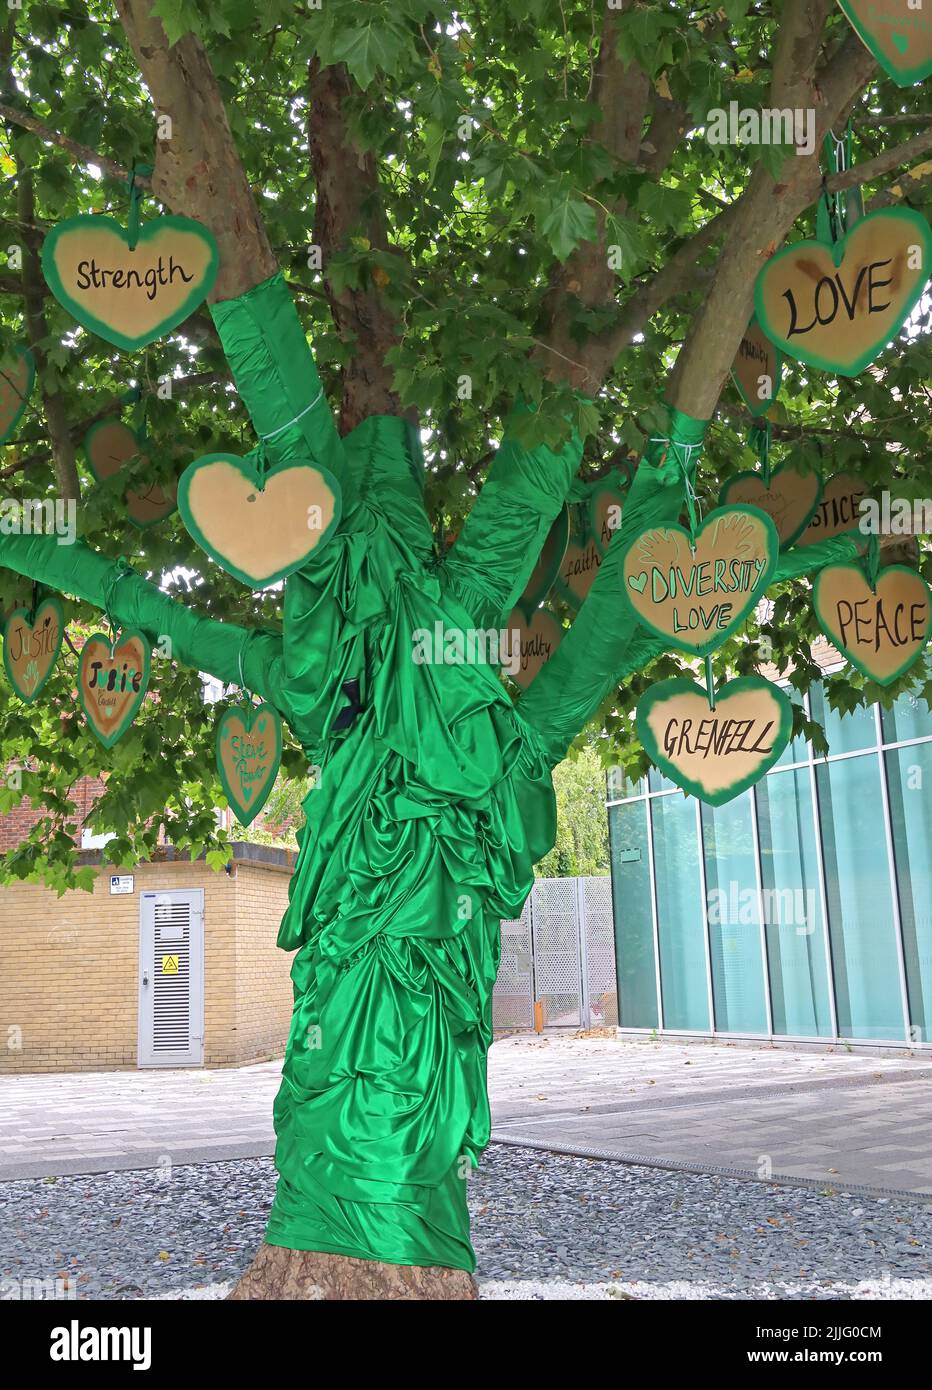 Grenfell Fire Memorial, Green Tree of Hearts and messages, Green for Grenfell, en dehors du centre de loisirs de North Kensington, Londres, Angleterre Banque D'Images